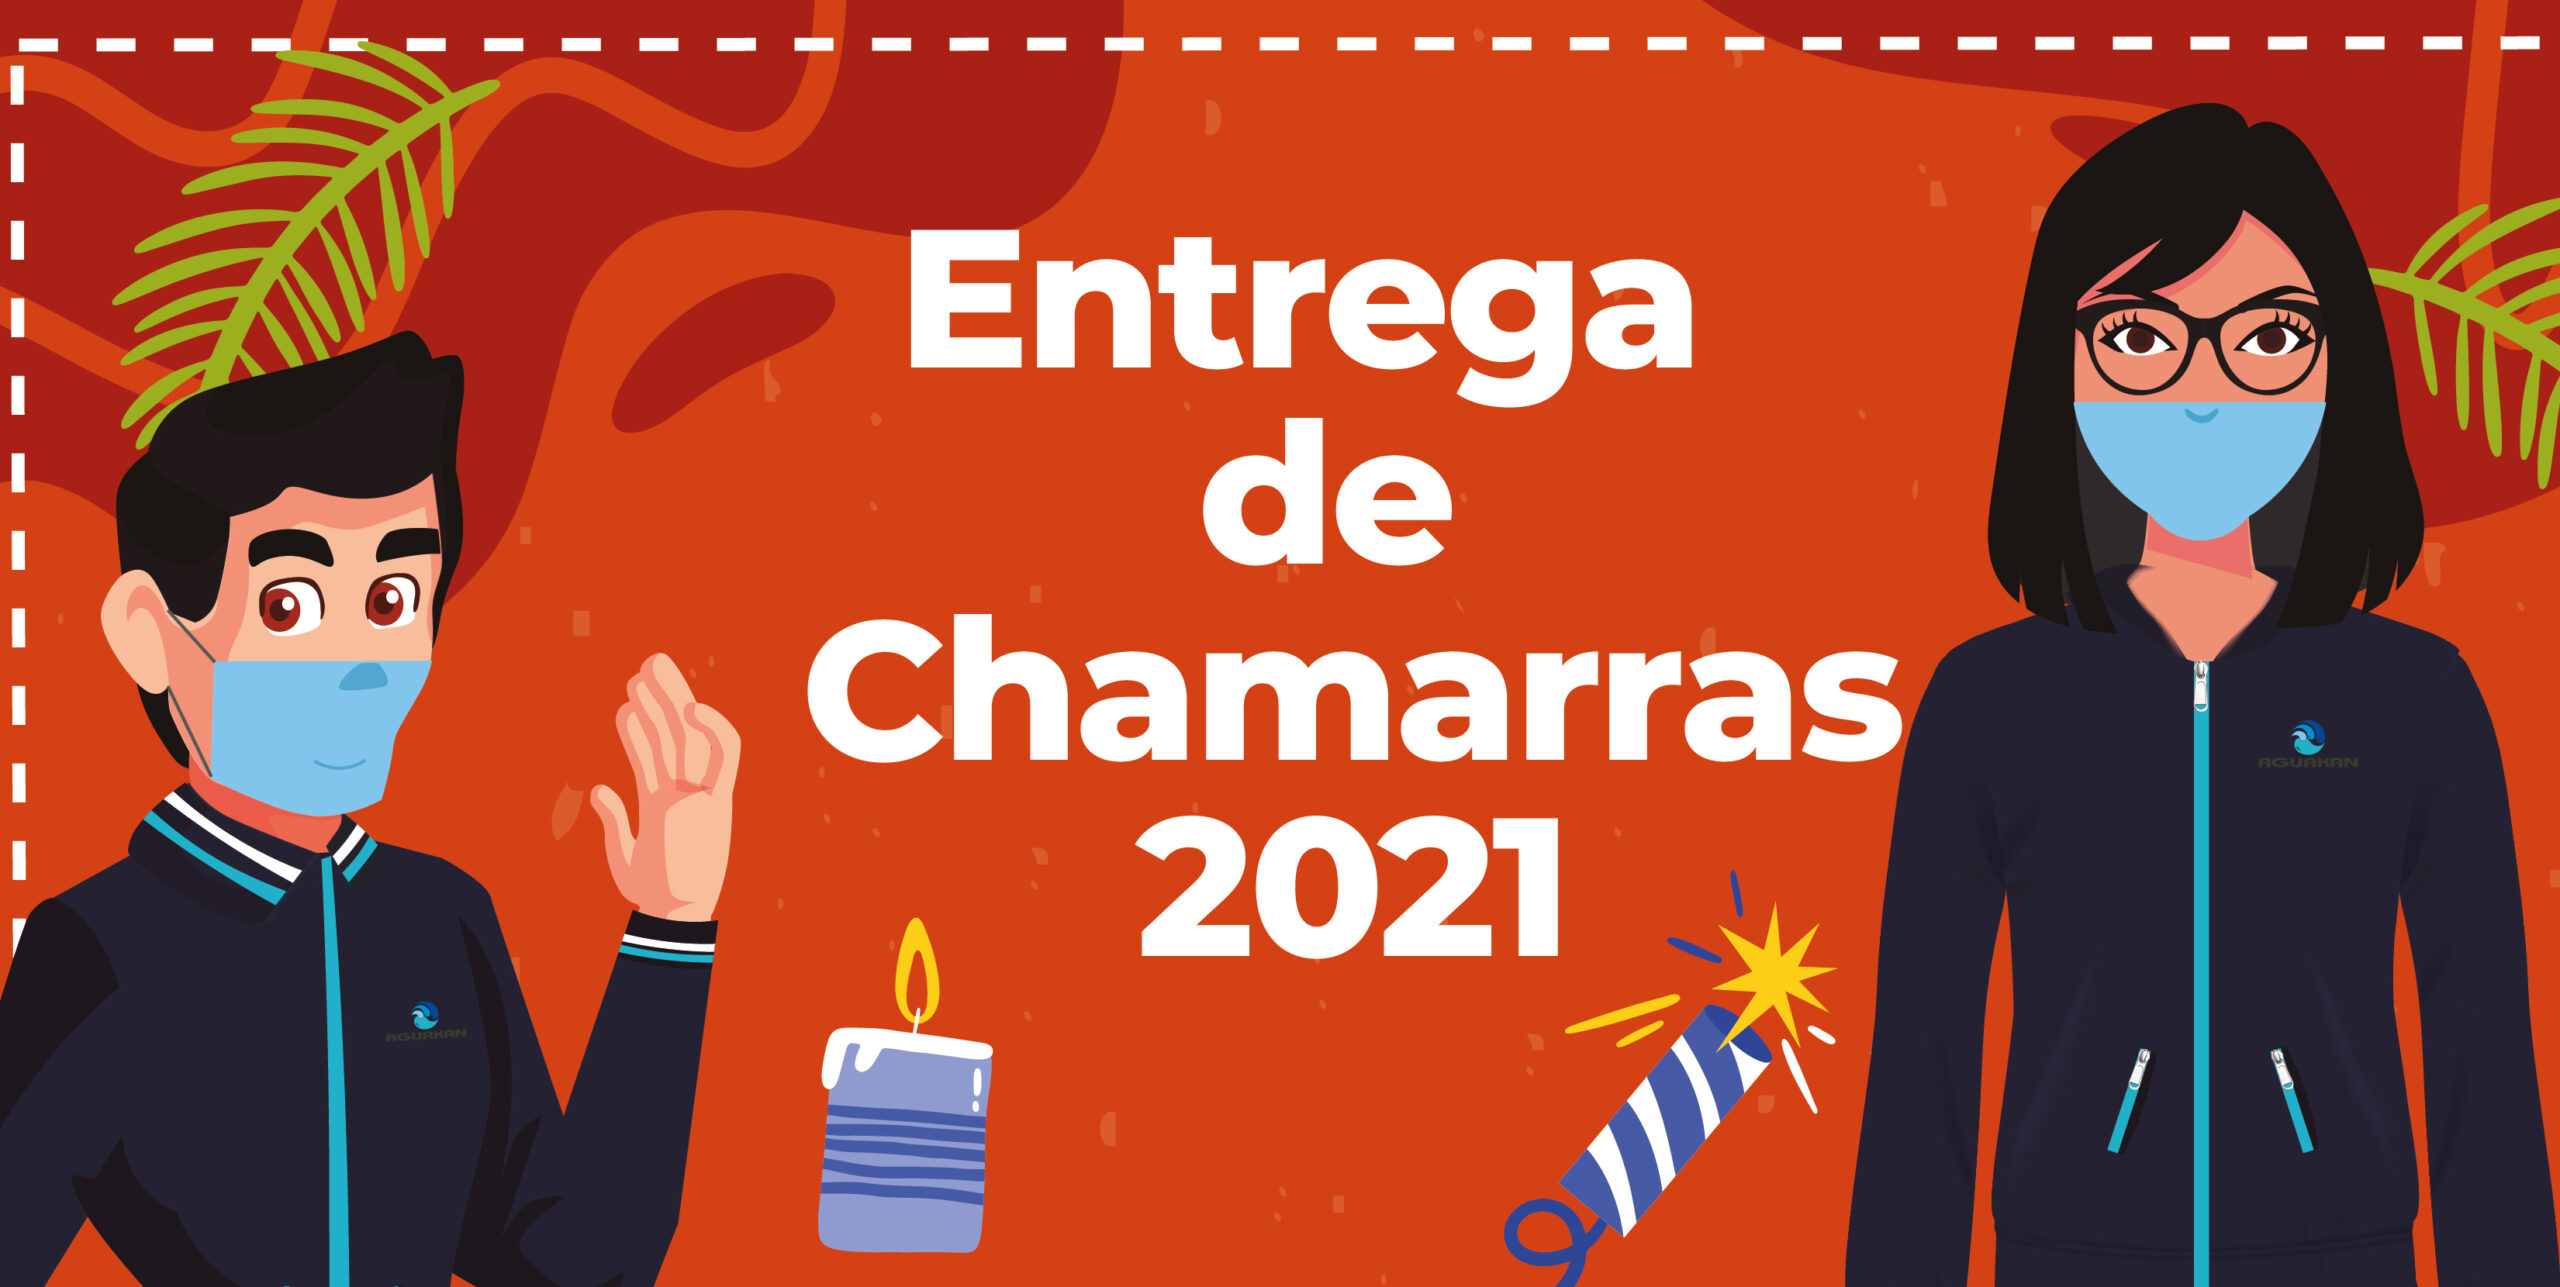 Entrega de Chamarras 2021 Playa del Carmen